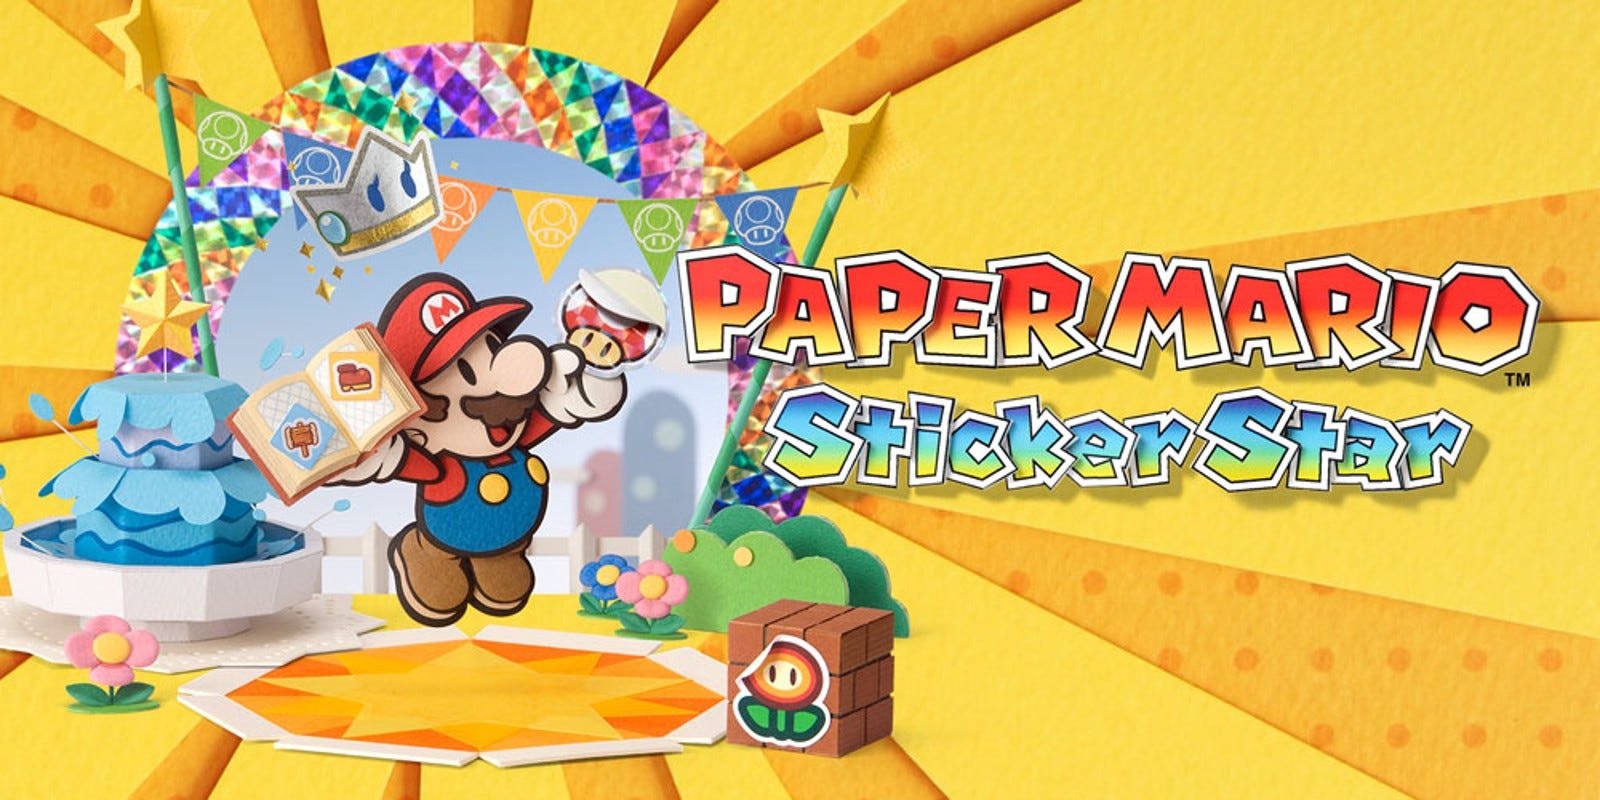 Super Paper Mario Level Up Chart